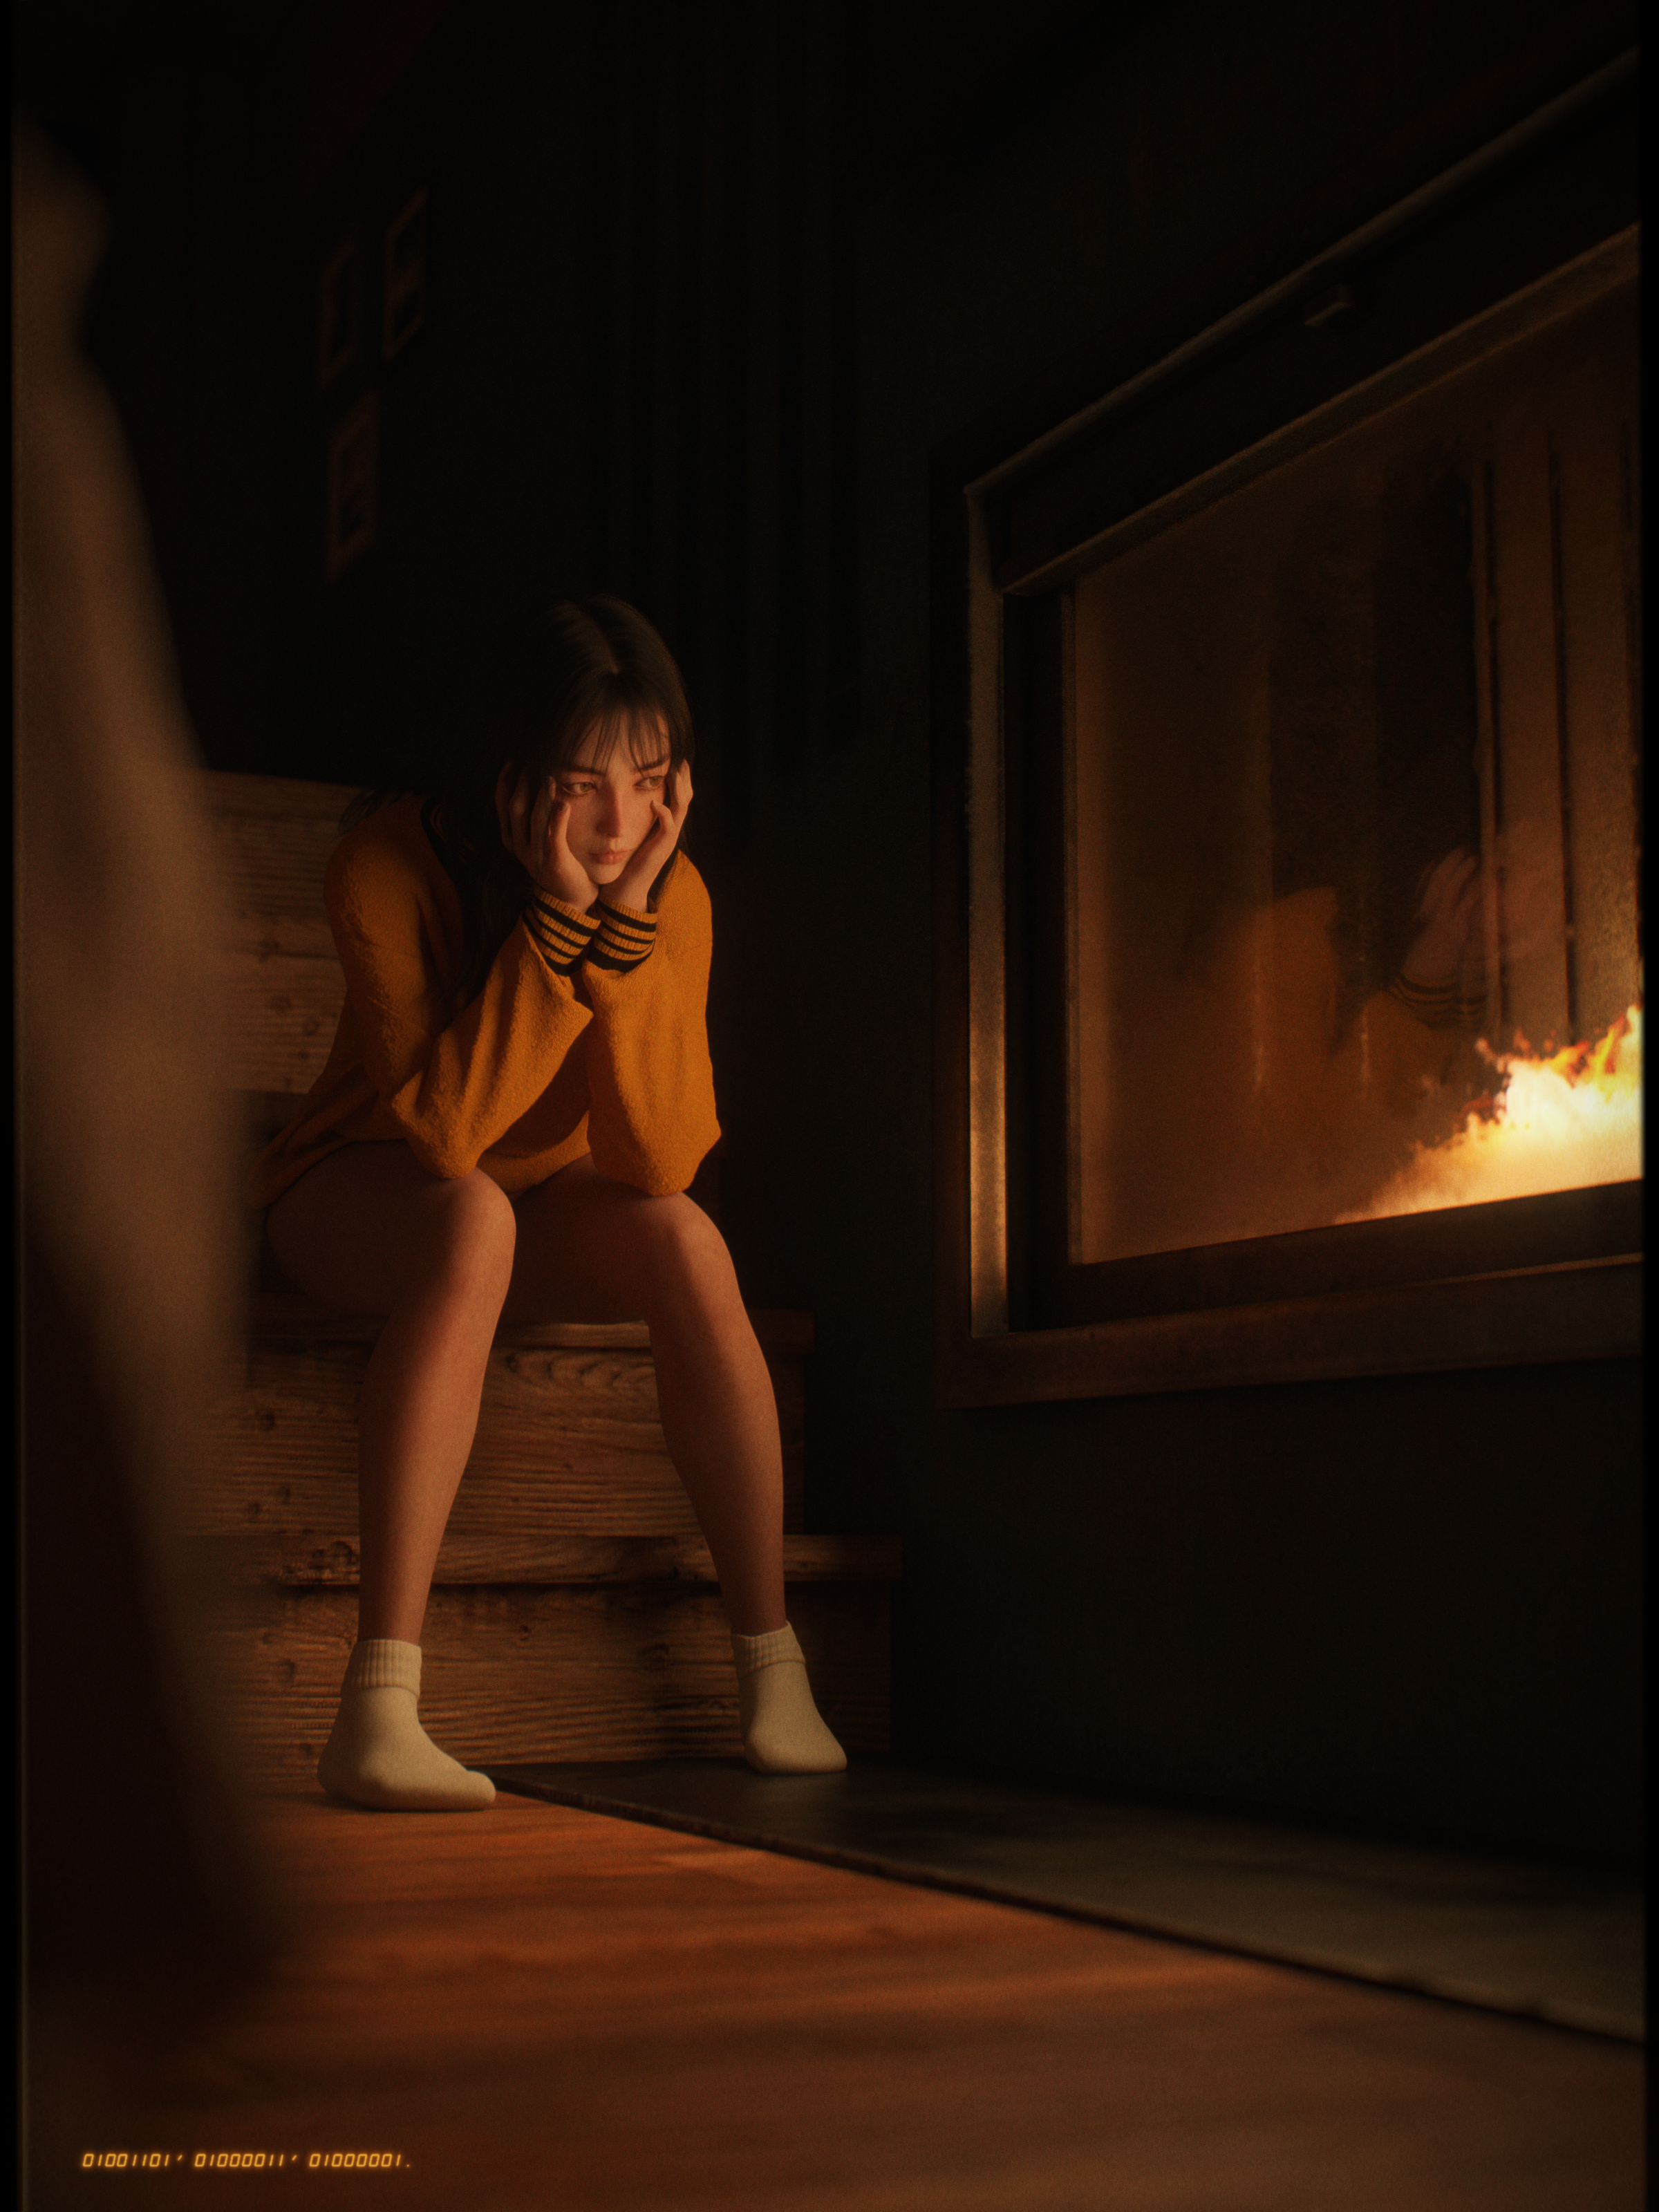 General 2400x3200 CGI fantasy girl fireplace low light digital art portrait display